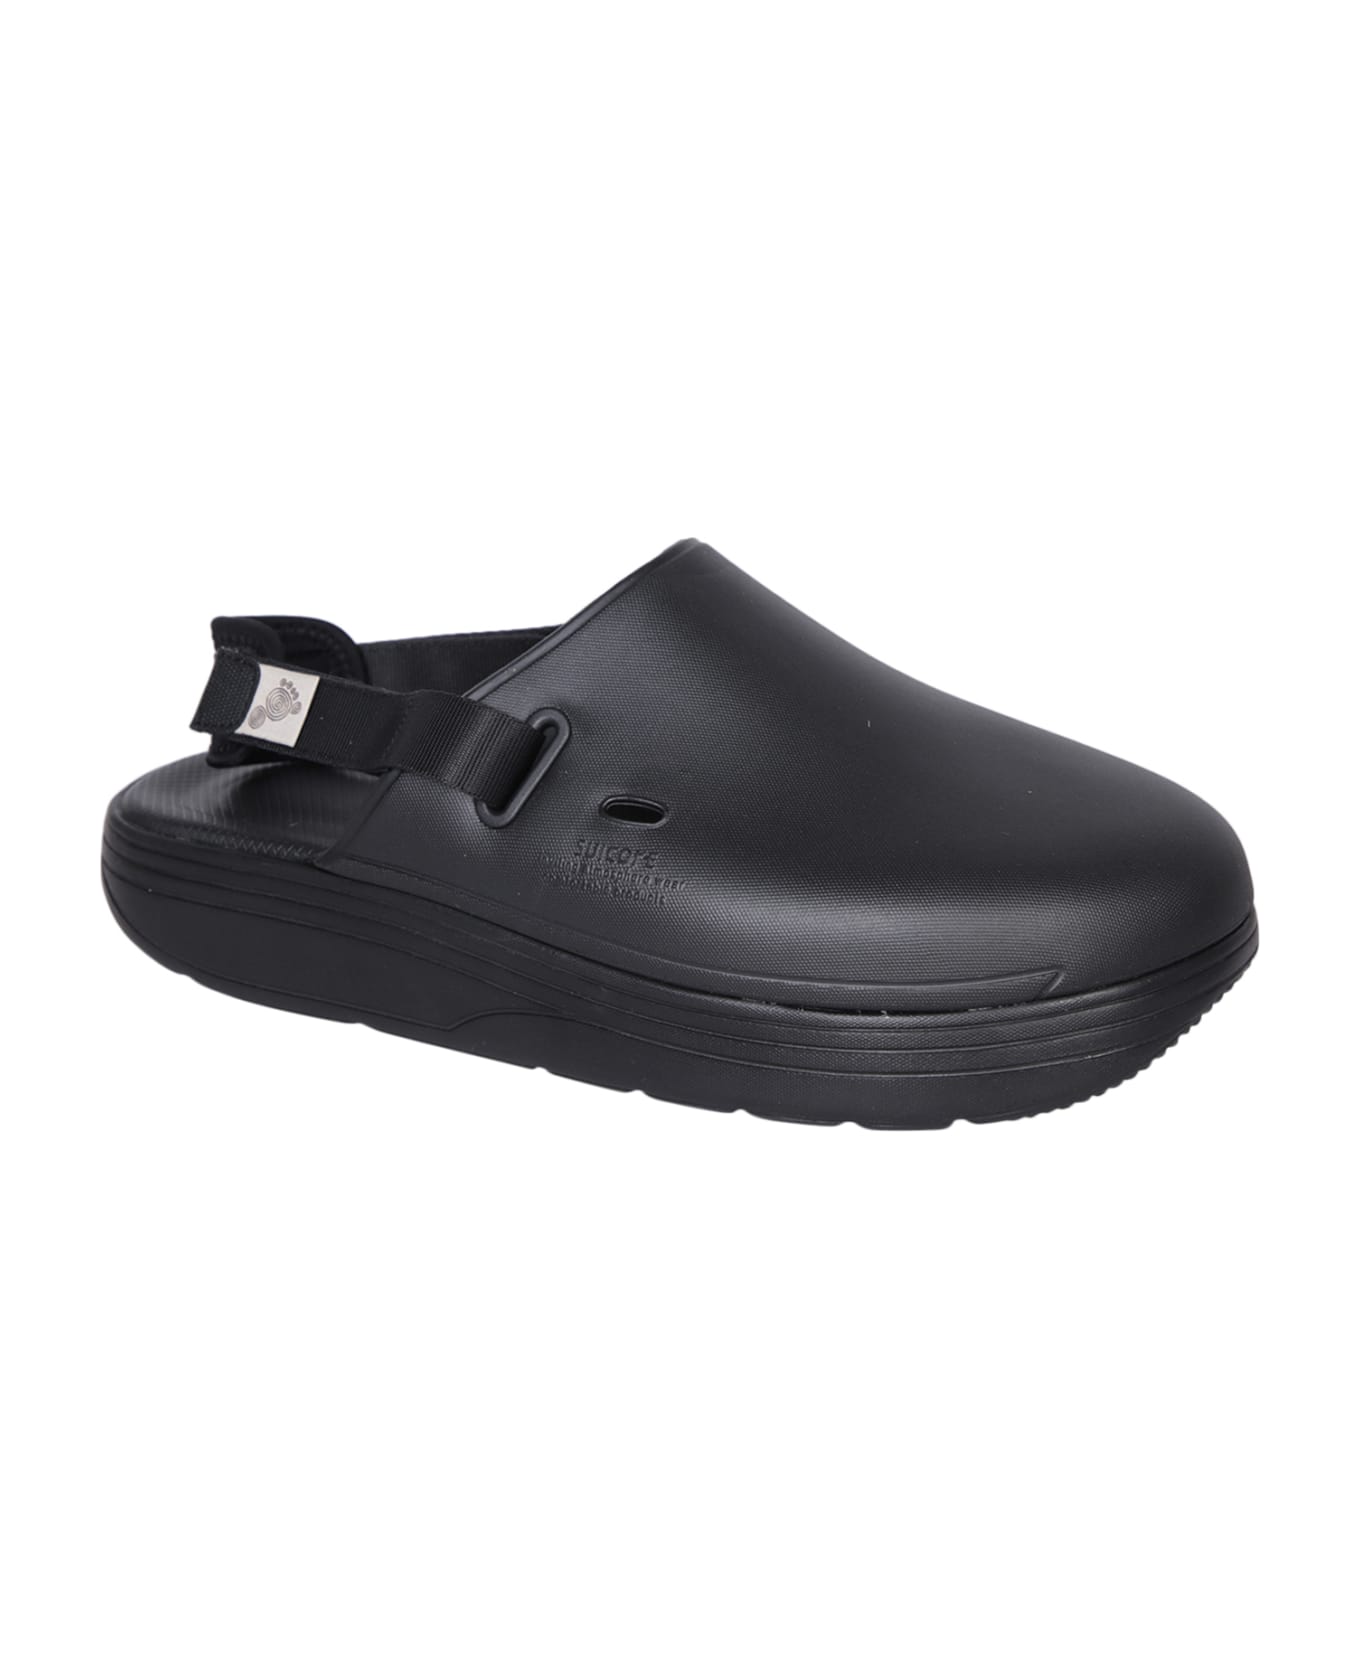 SUICOKE Cappo Black Sandals - Black